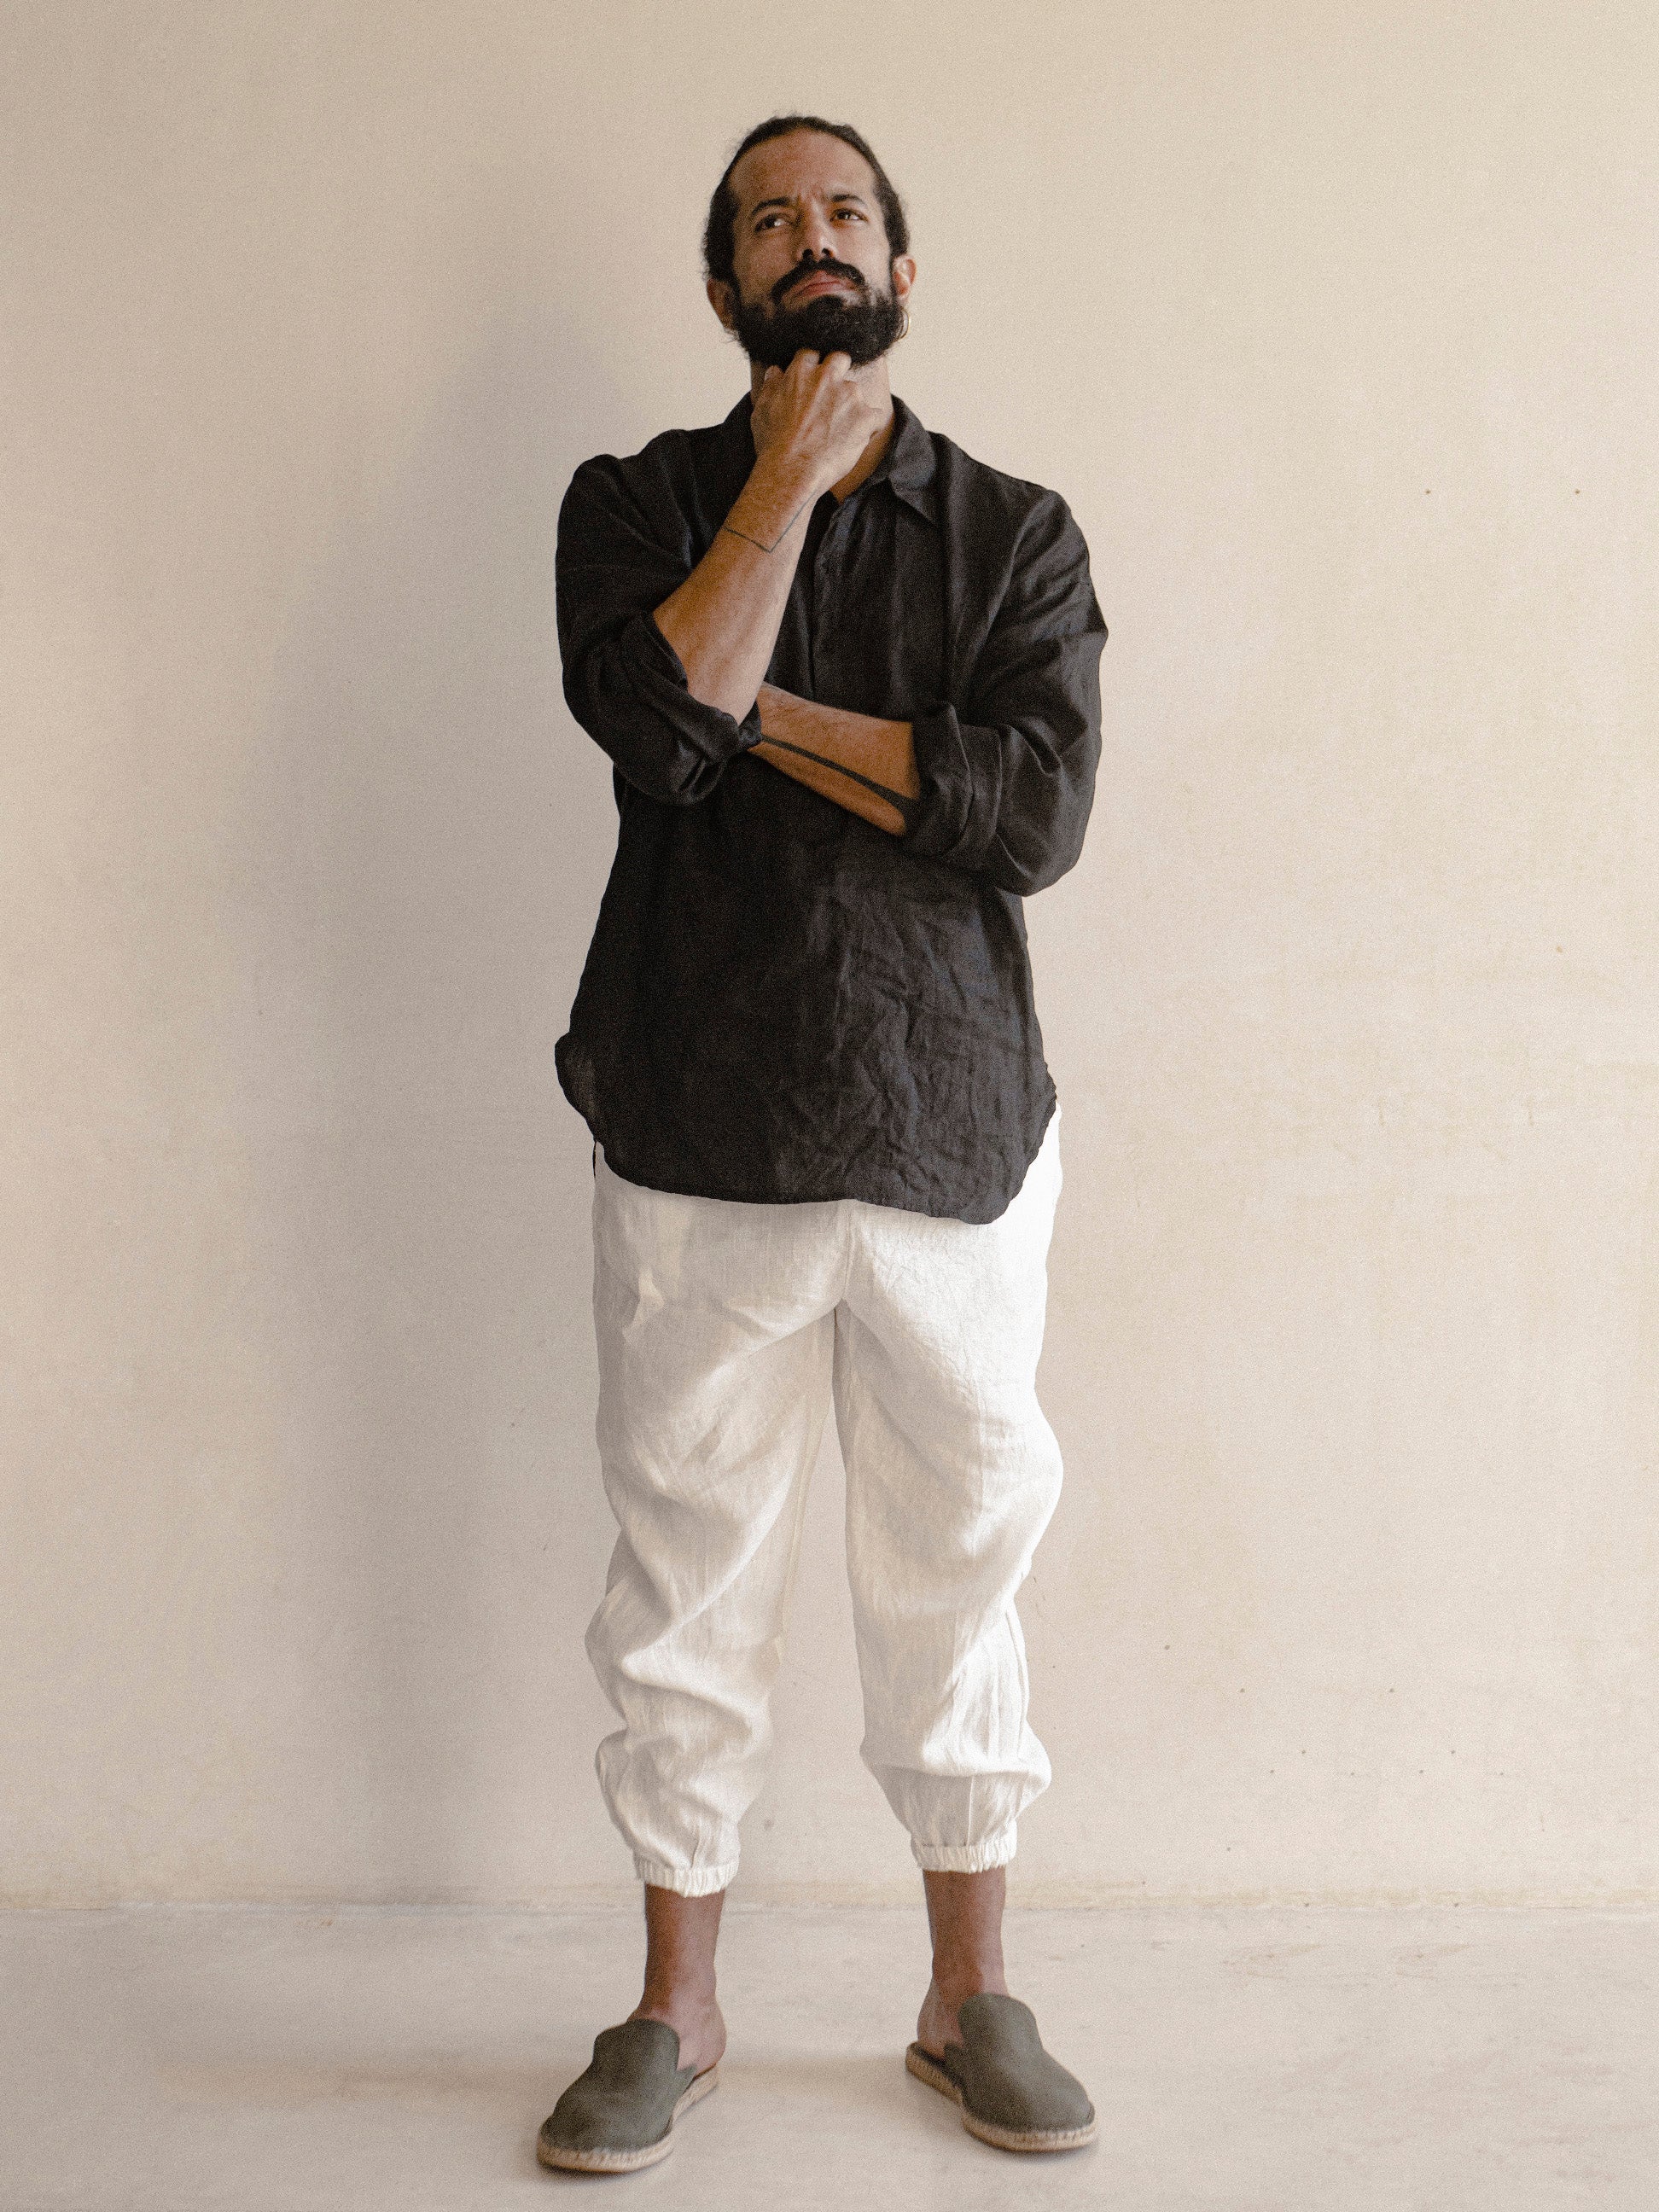 Men's Linen Joggers White : : Clothing & Accessories